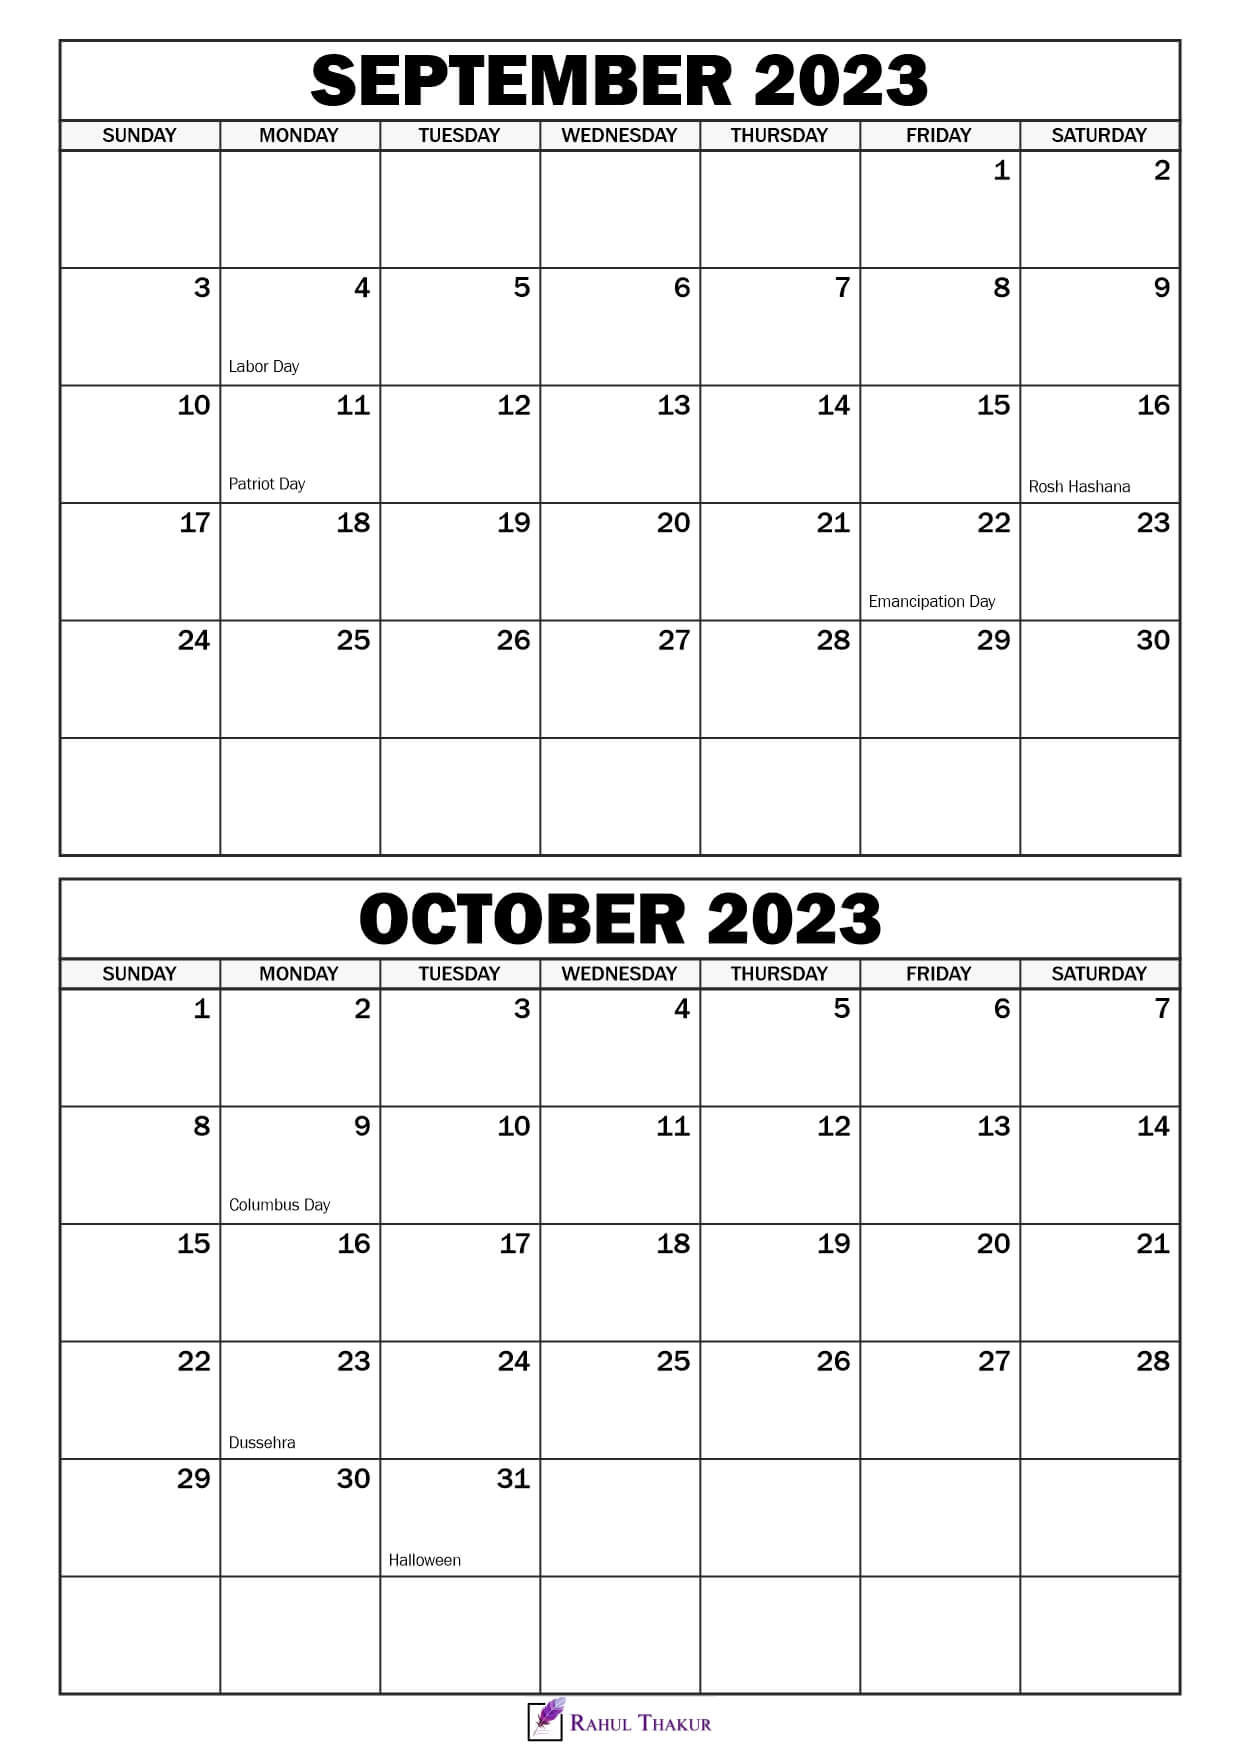 September October 2023 Calendar with Holidays